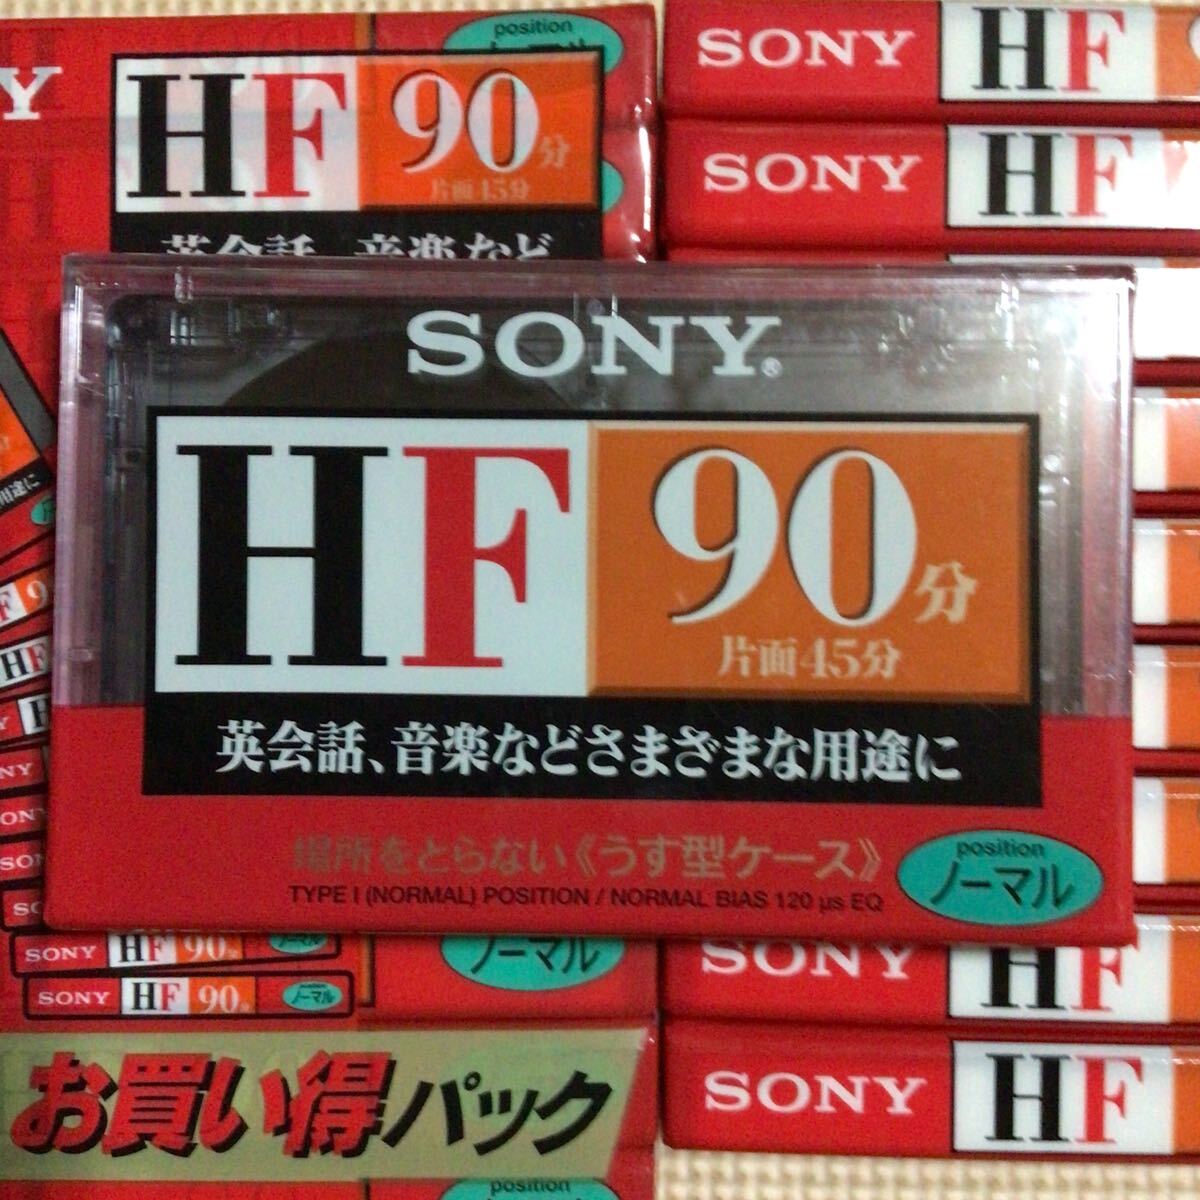 SONY HF 90 normal position cassette tape 20 pcs set [ unopened new goods ]**